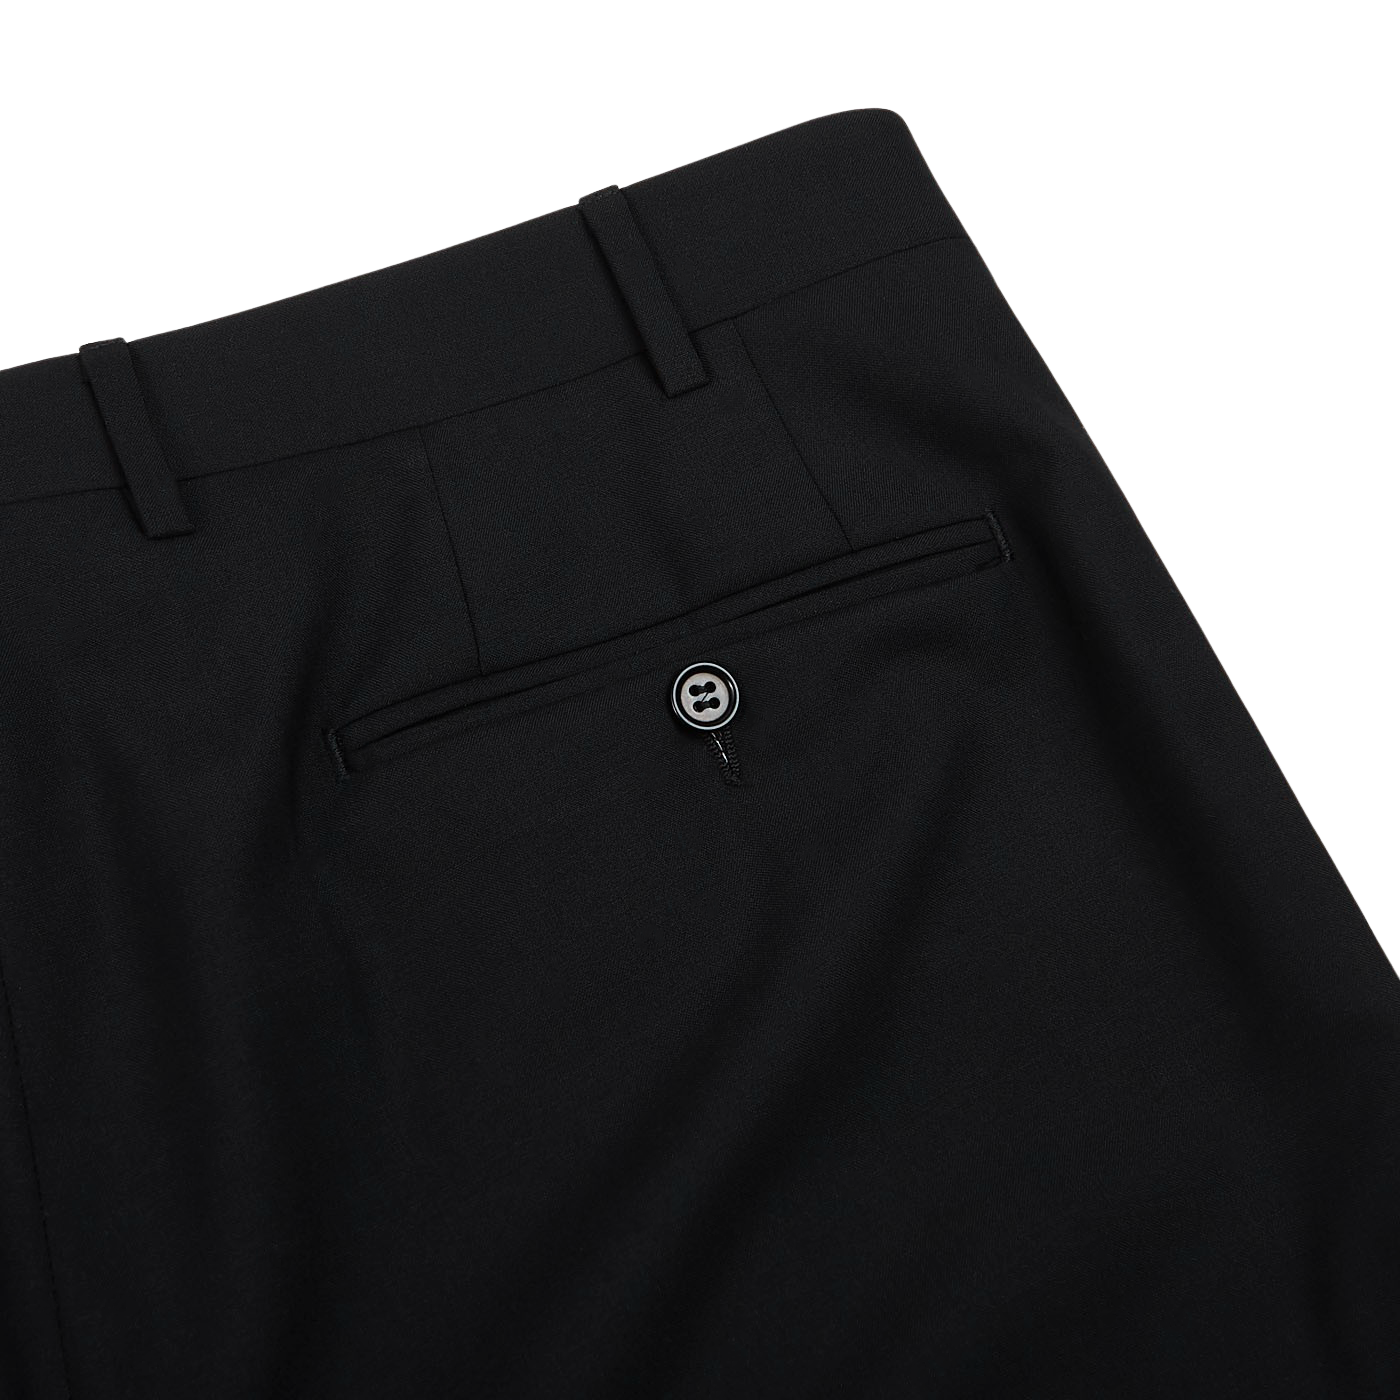 Canali Black Tropical Wool Single Pleat Trousers Pocket